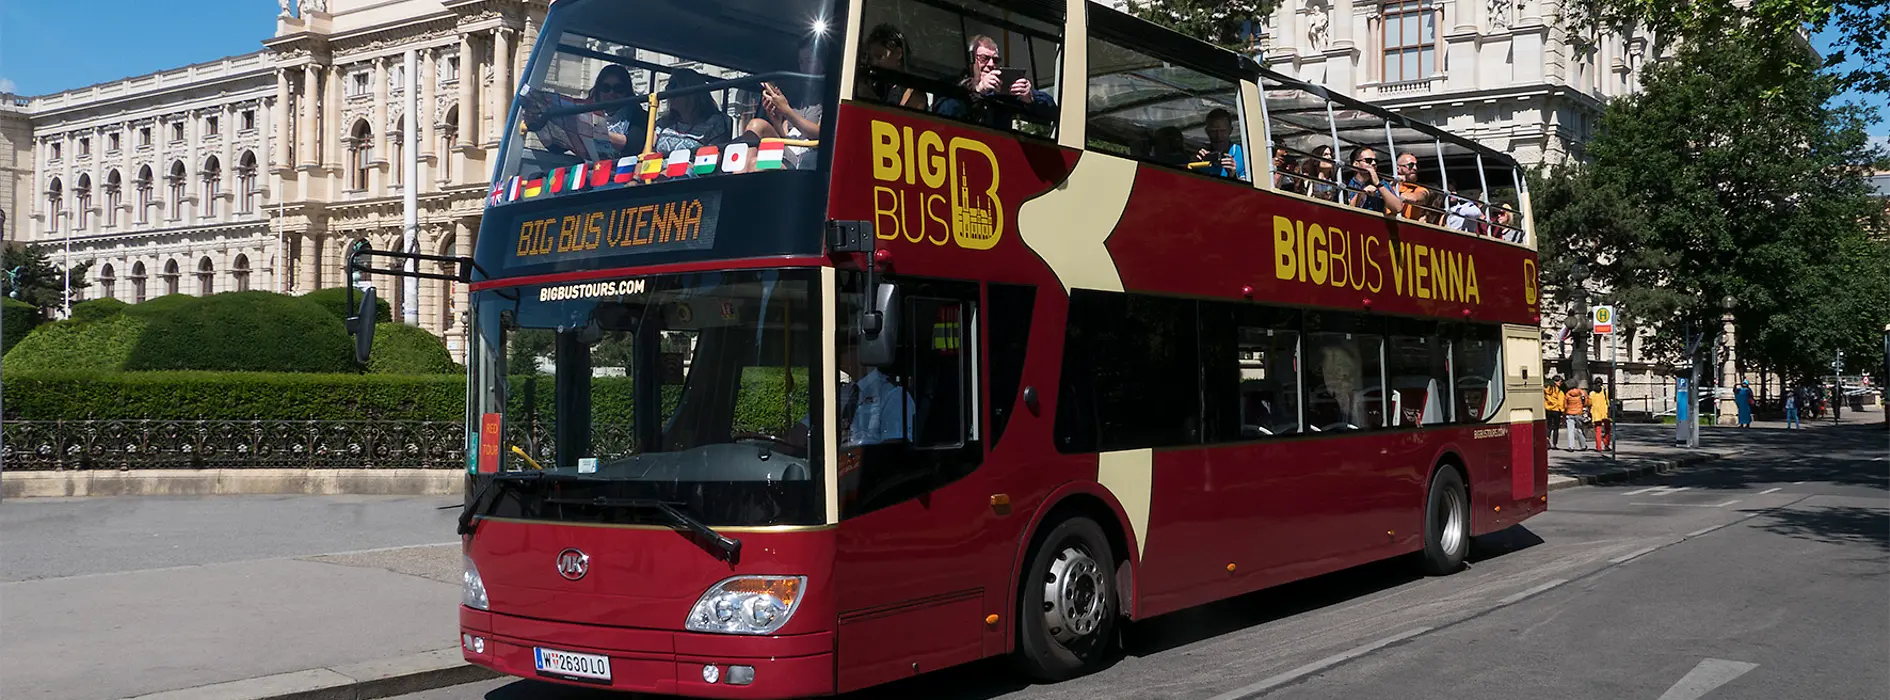 Big Bus Vienna - piros emeletes busz